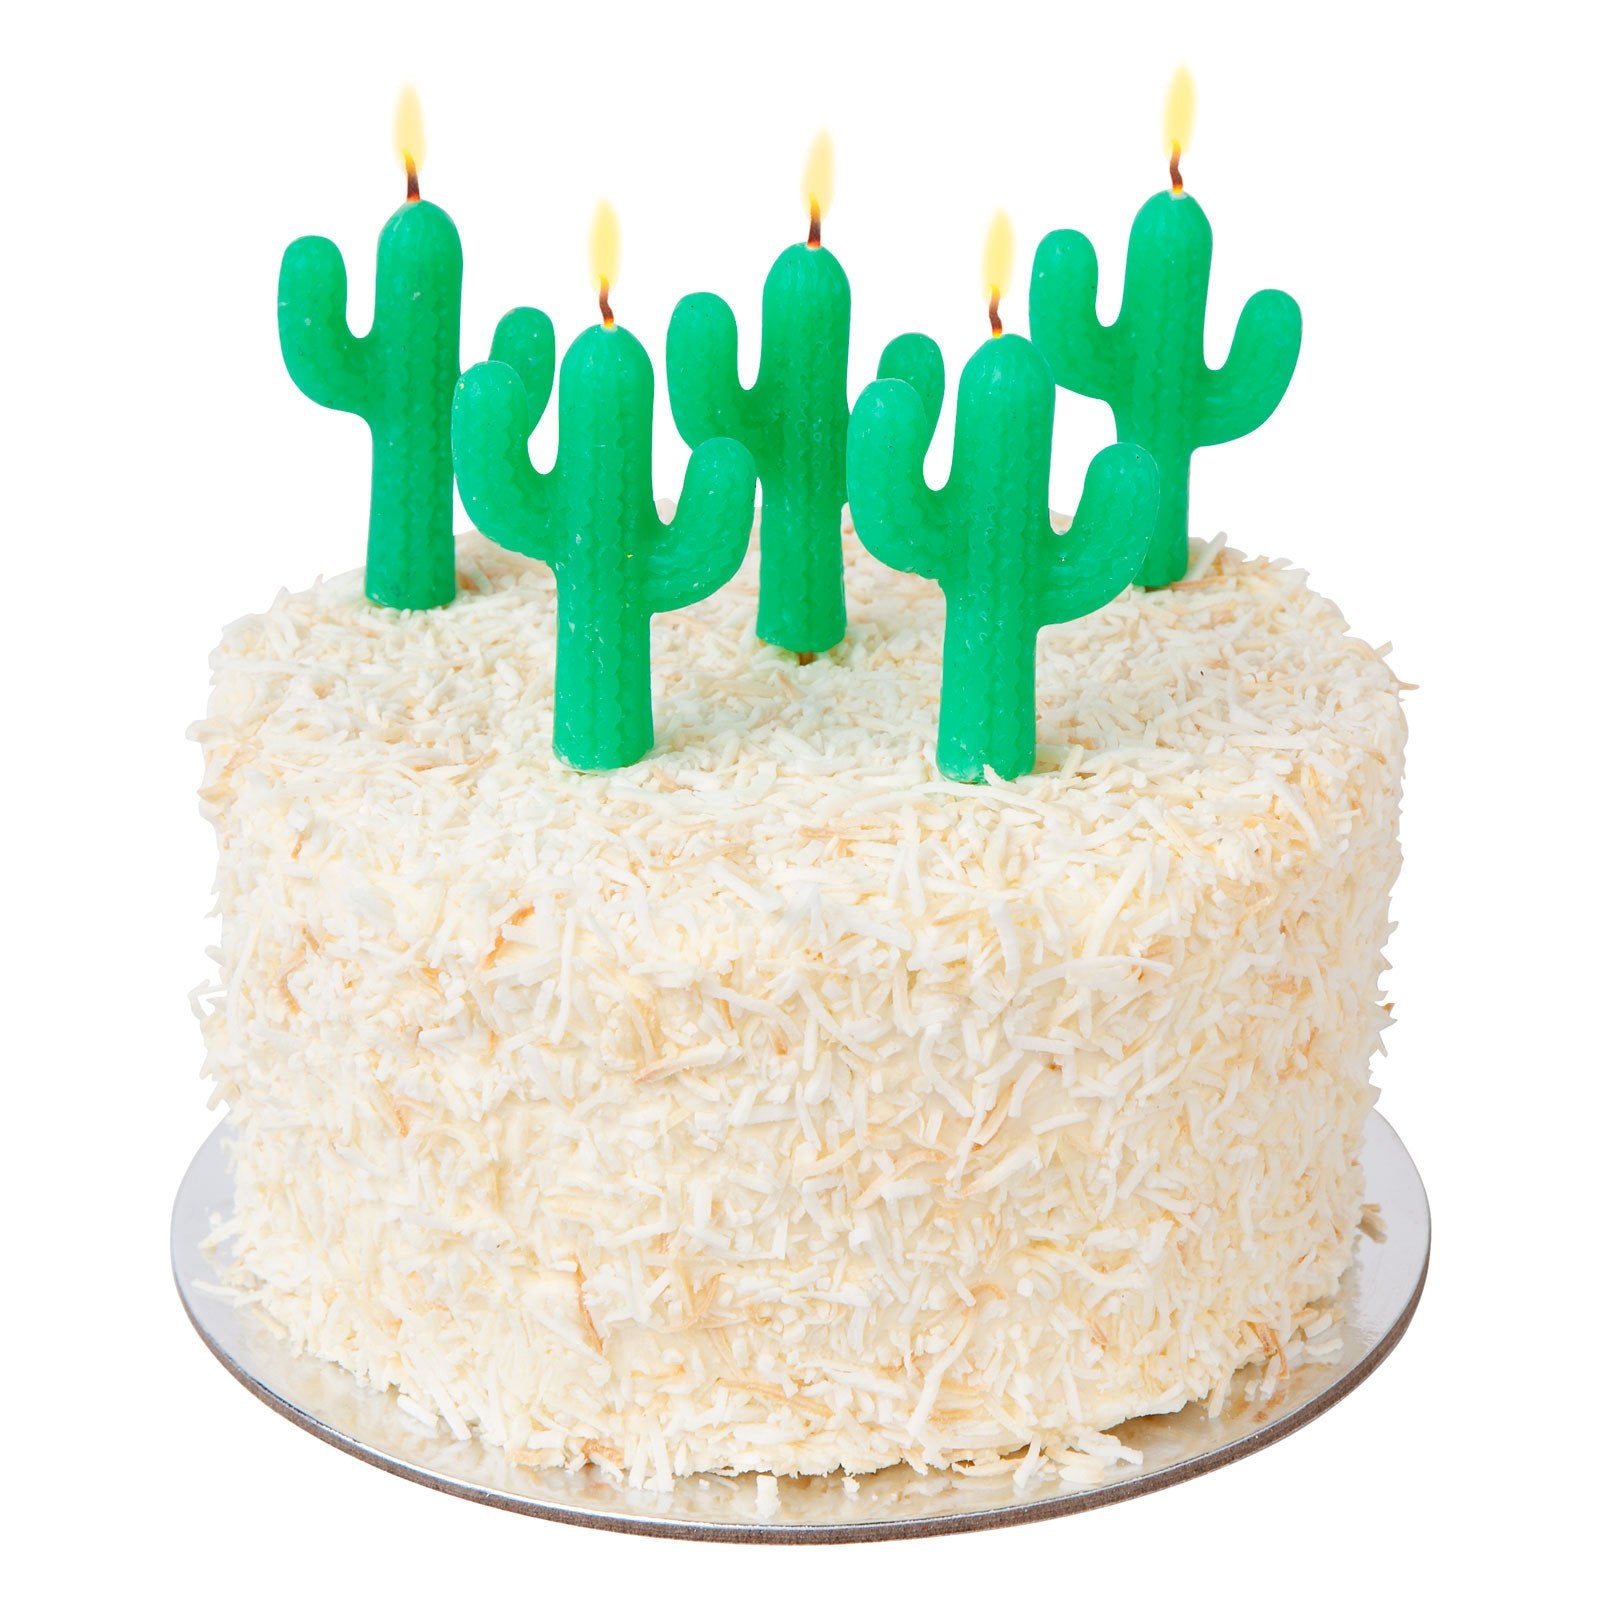 SUNNYLIFE MAKE THE CAKE! Cake Candles 5 pc set - Green Cactus